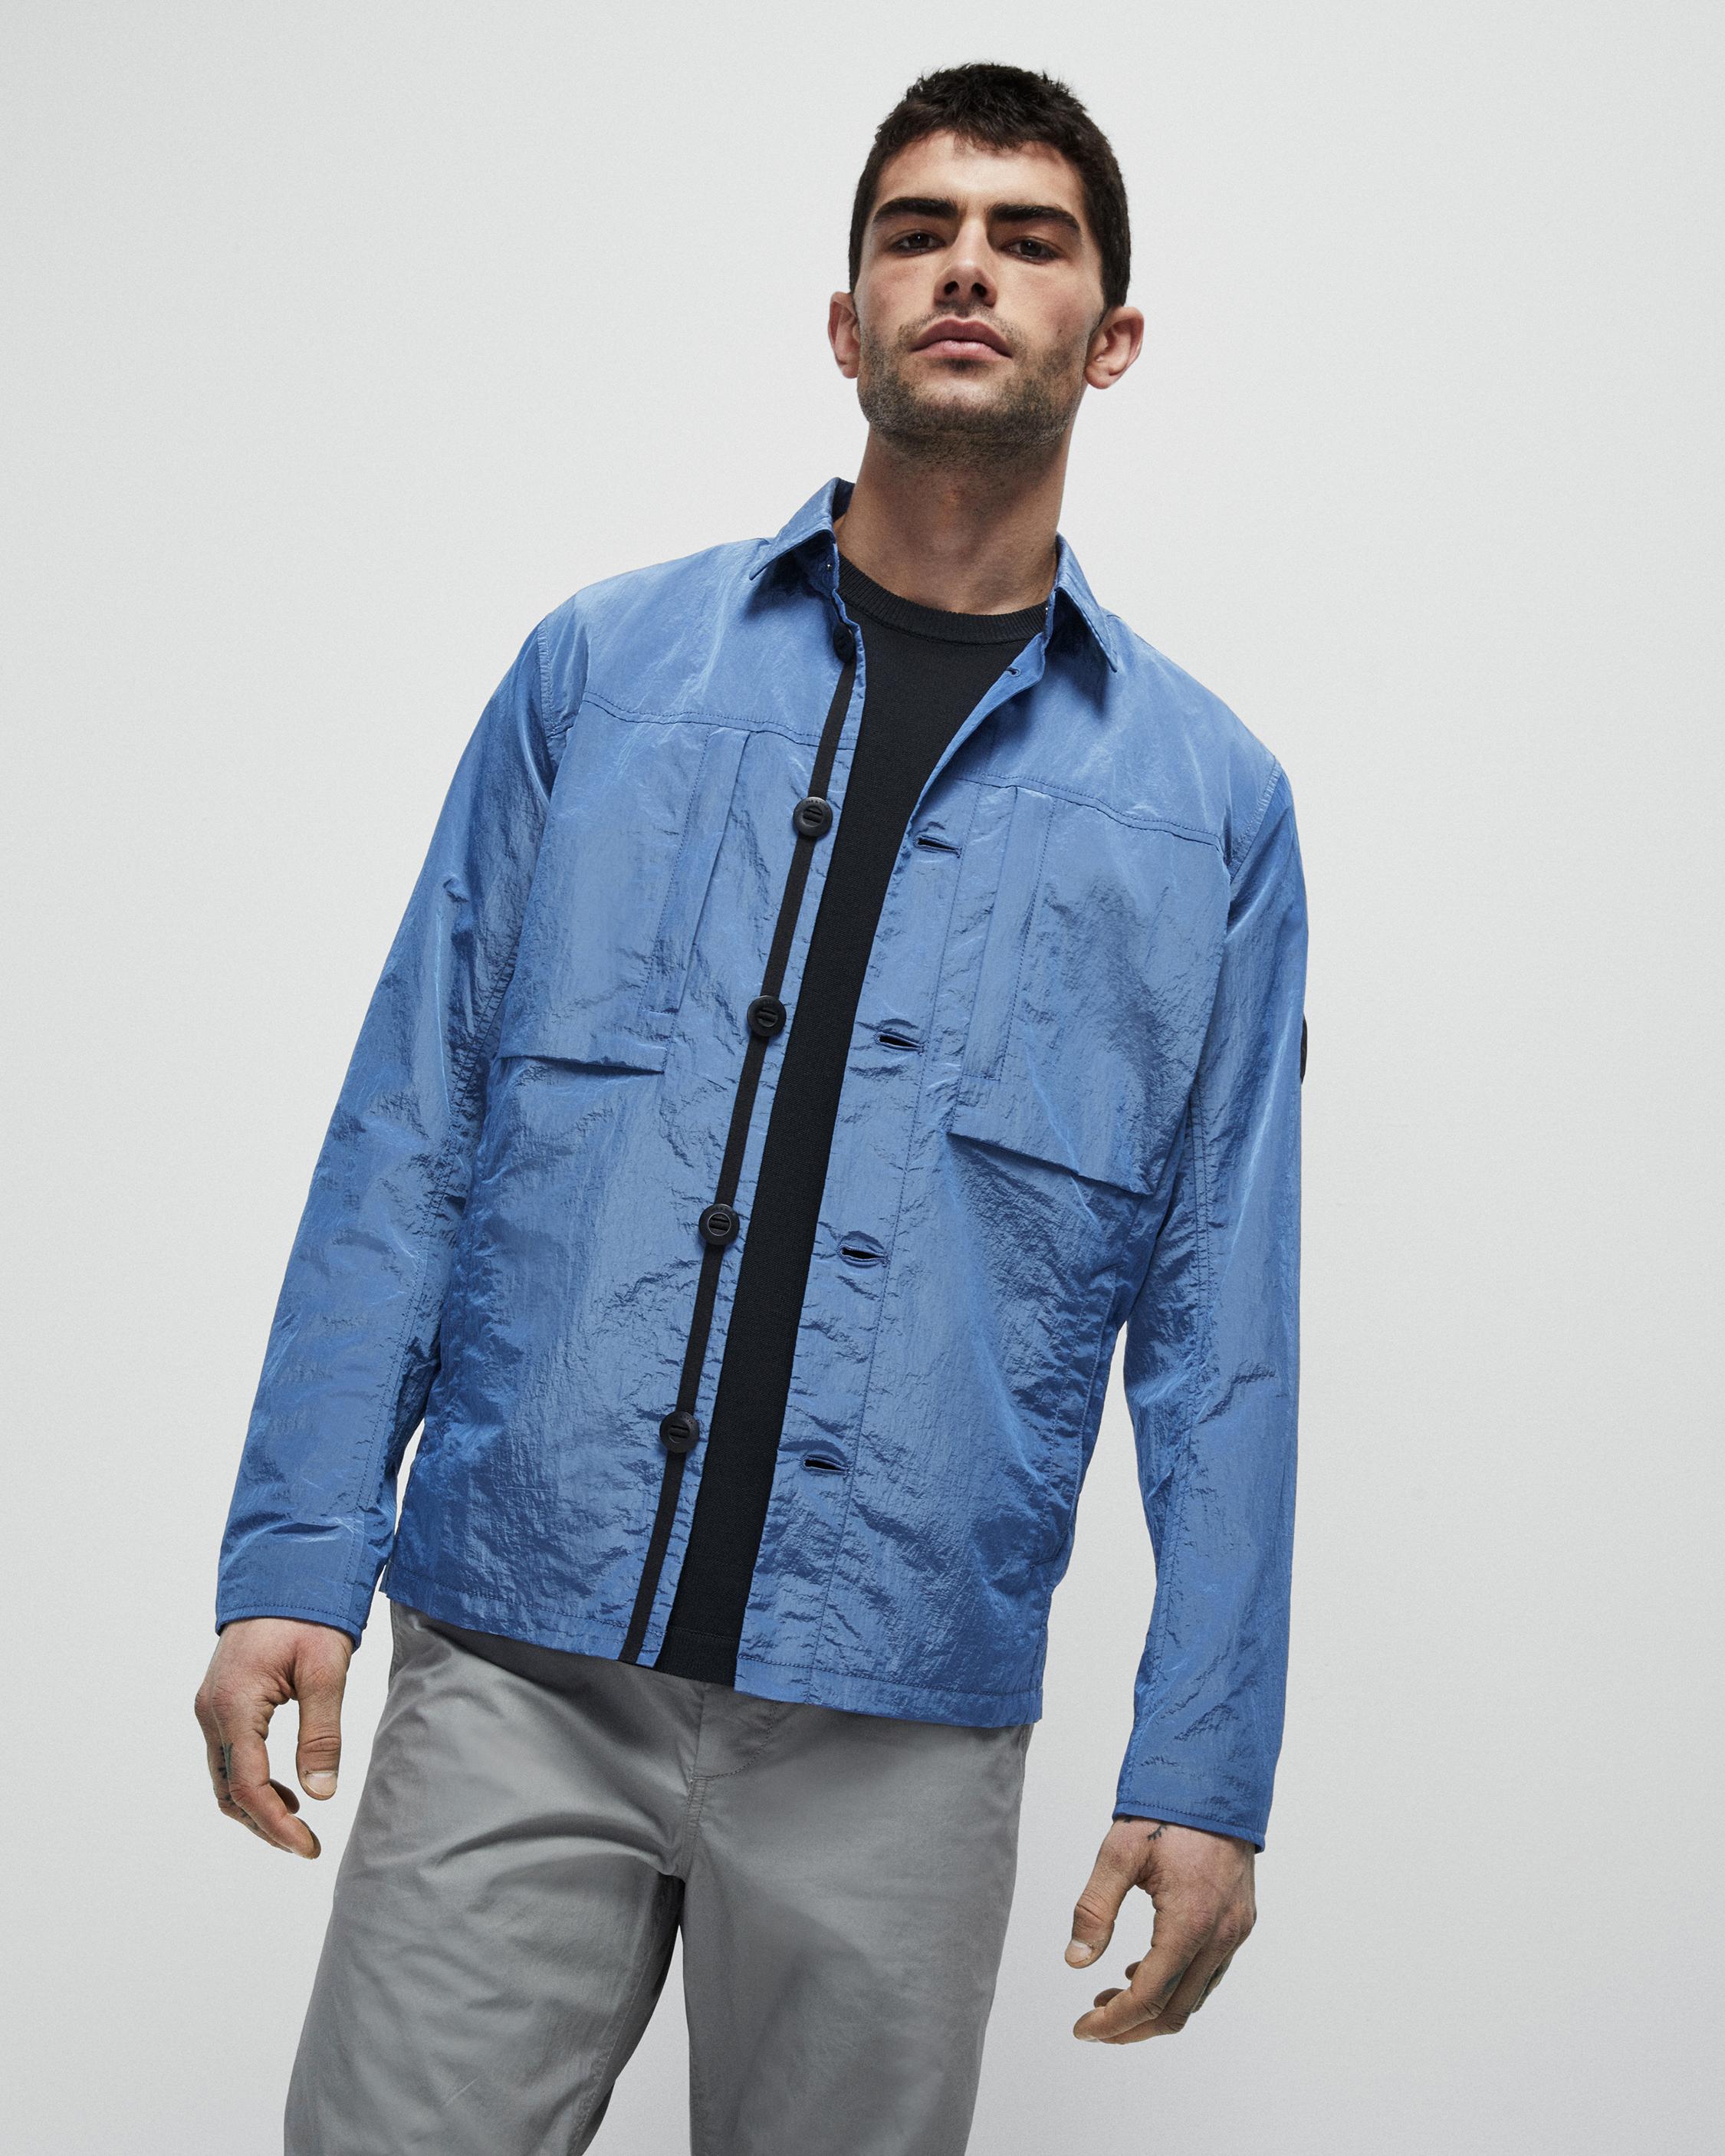 Men's Coats & Jackets: Bomber, Trucker & More | rag & bone